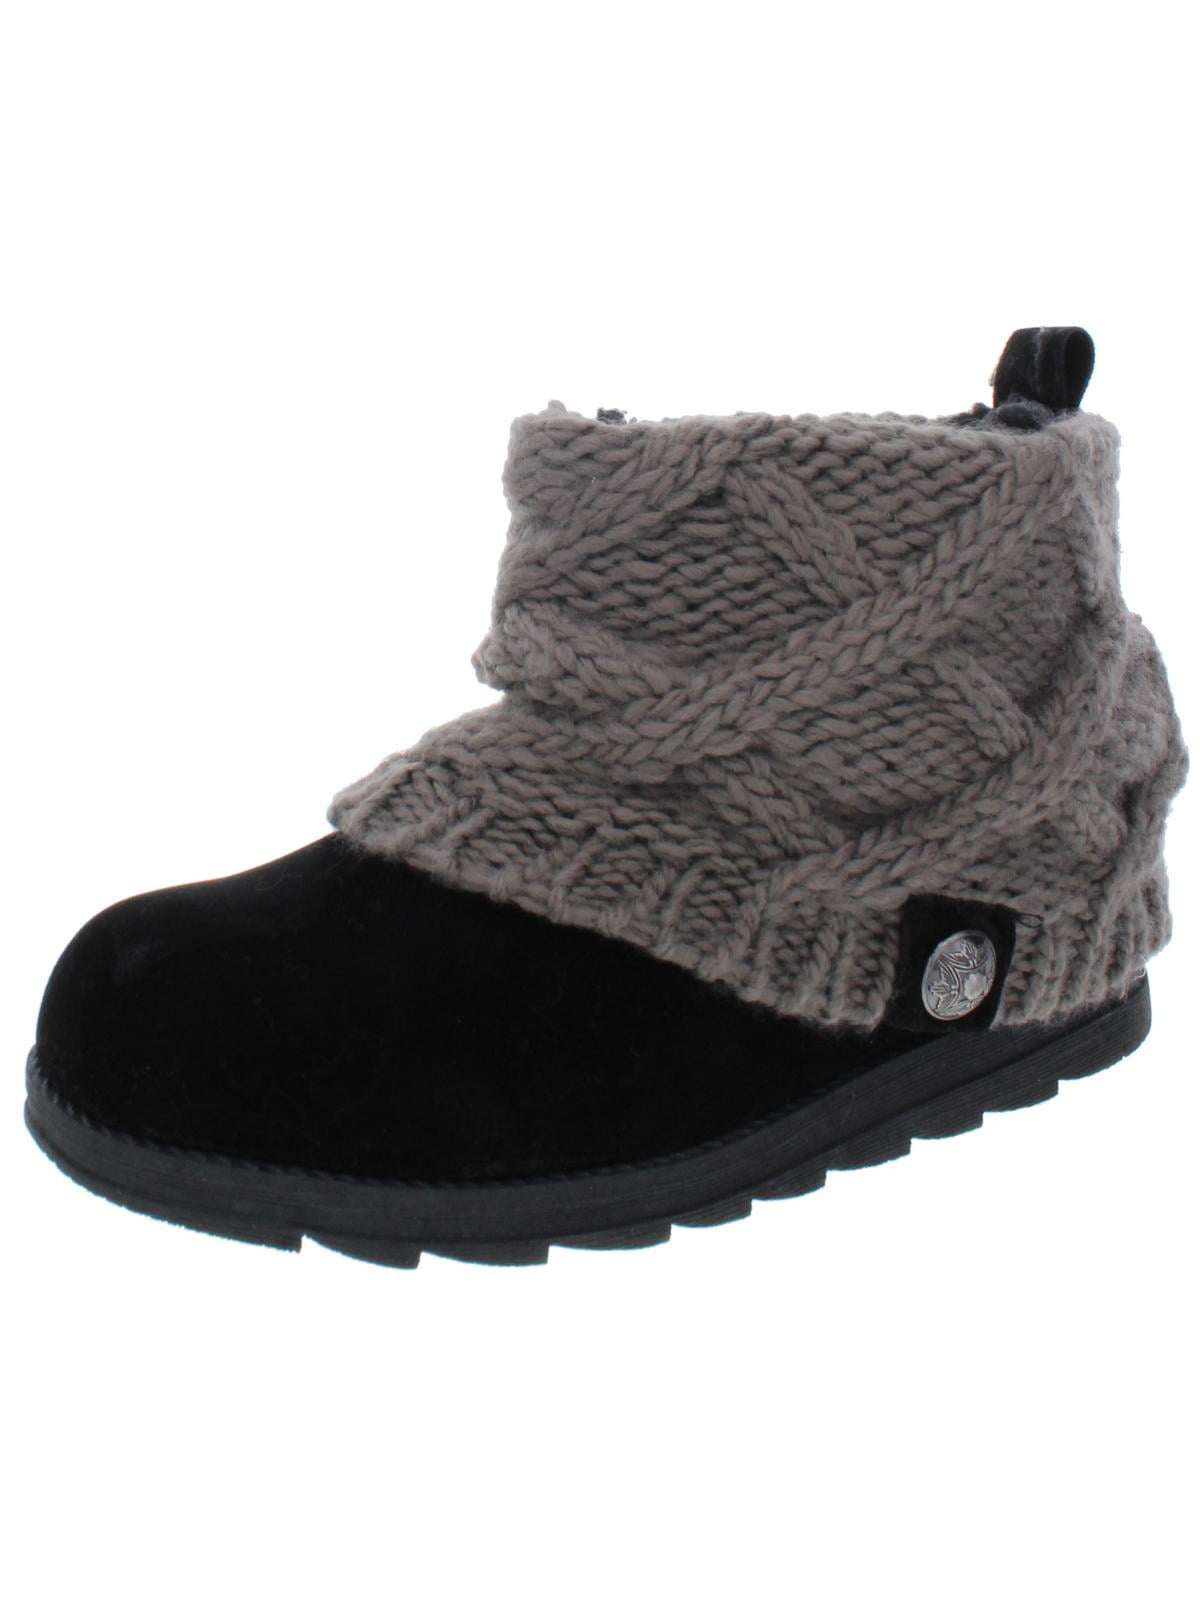 Muk Luks Womens Patti Boots Faux Suede Knit Winter Boots - Walmart.com